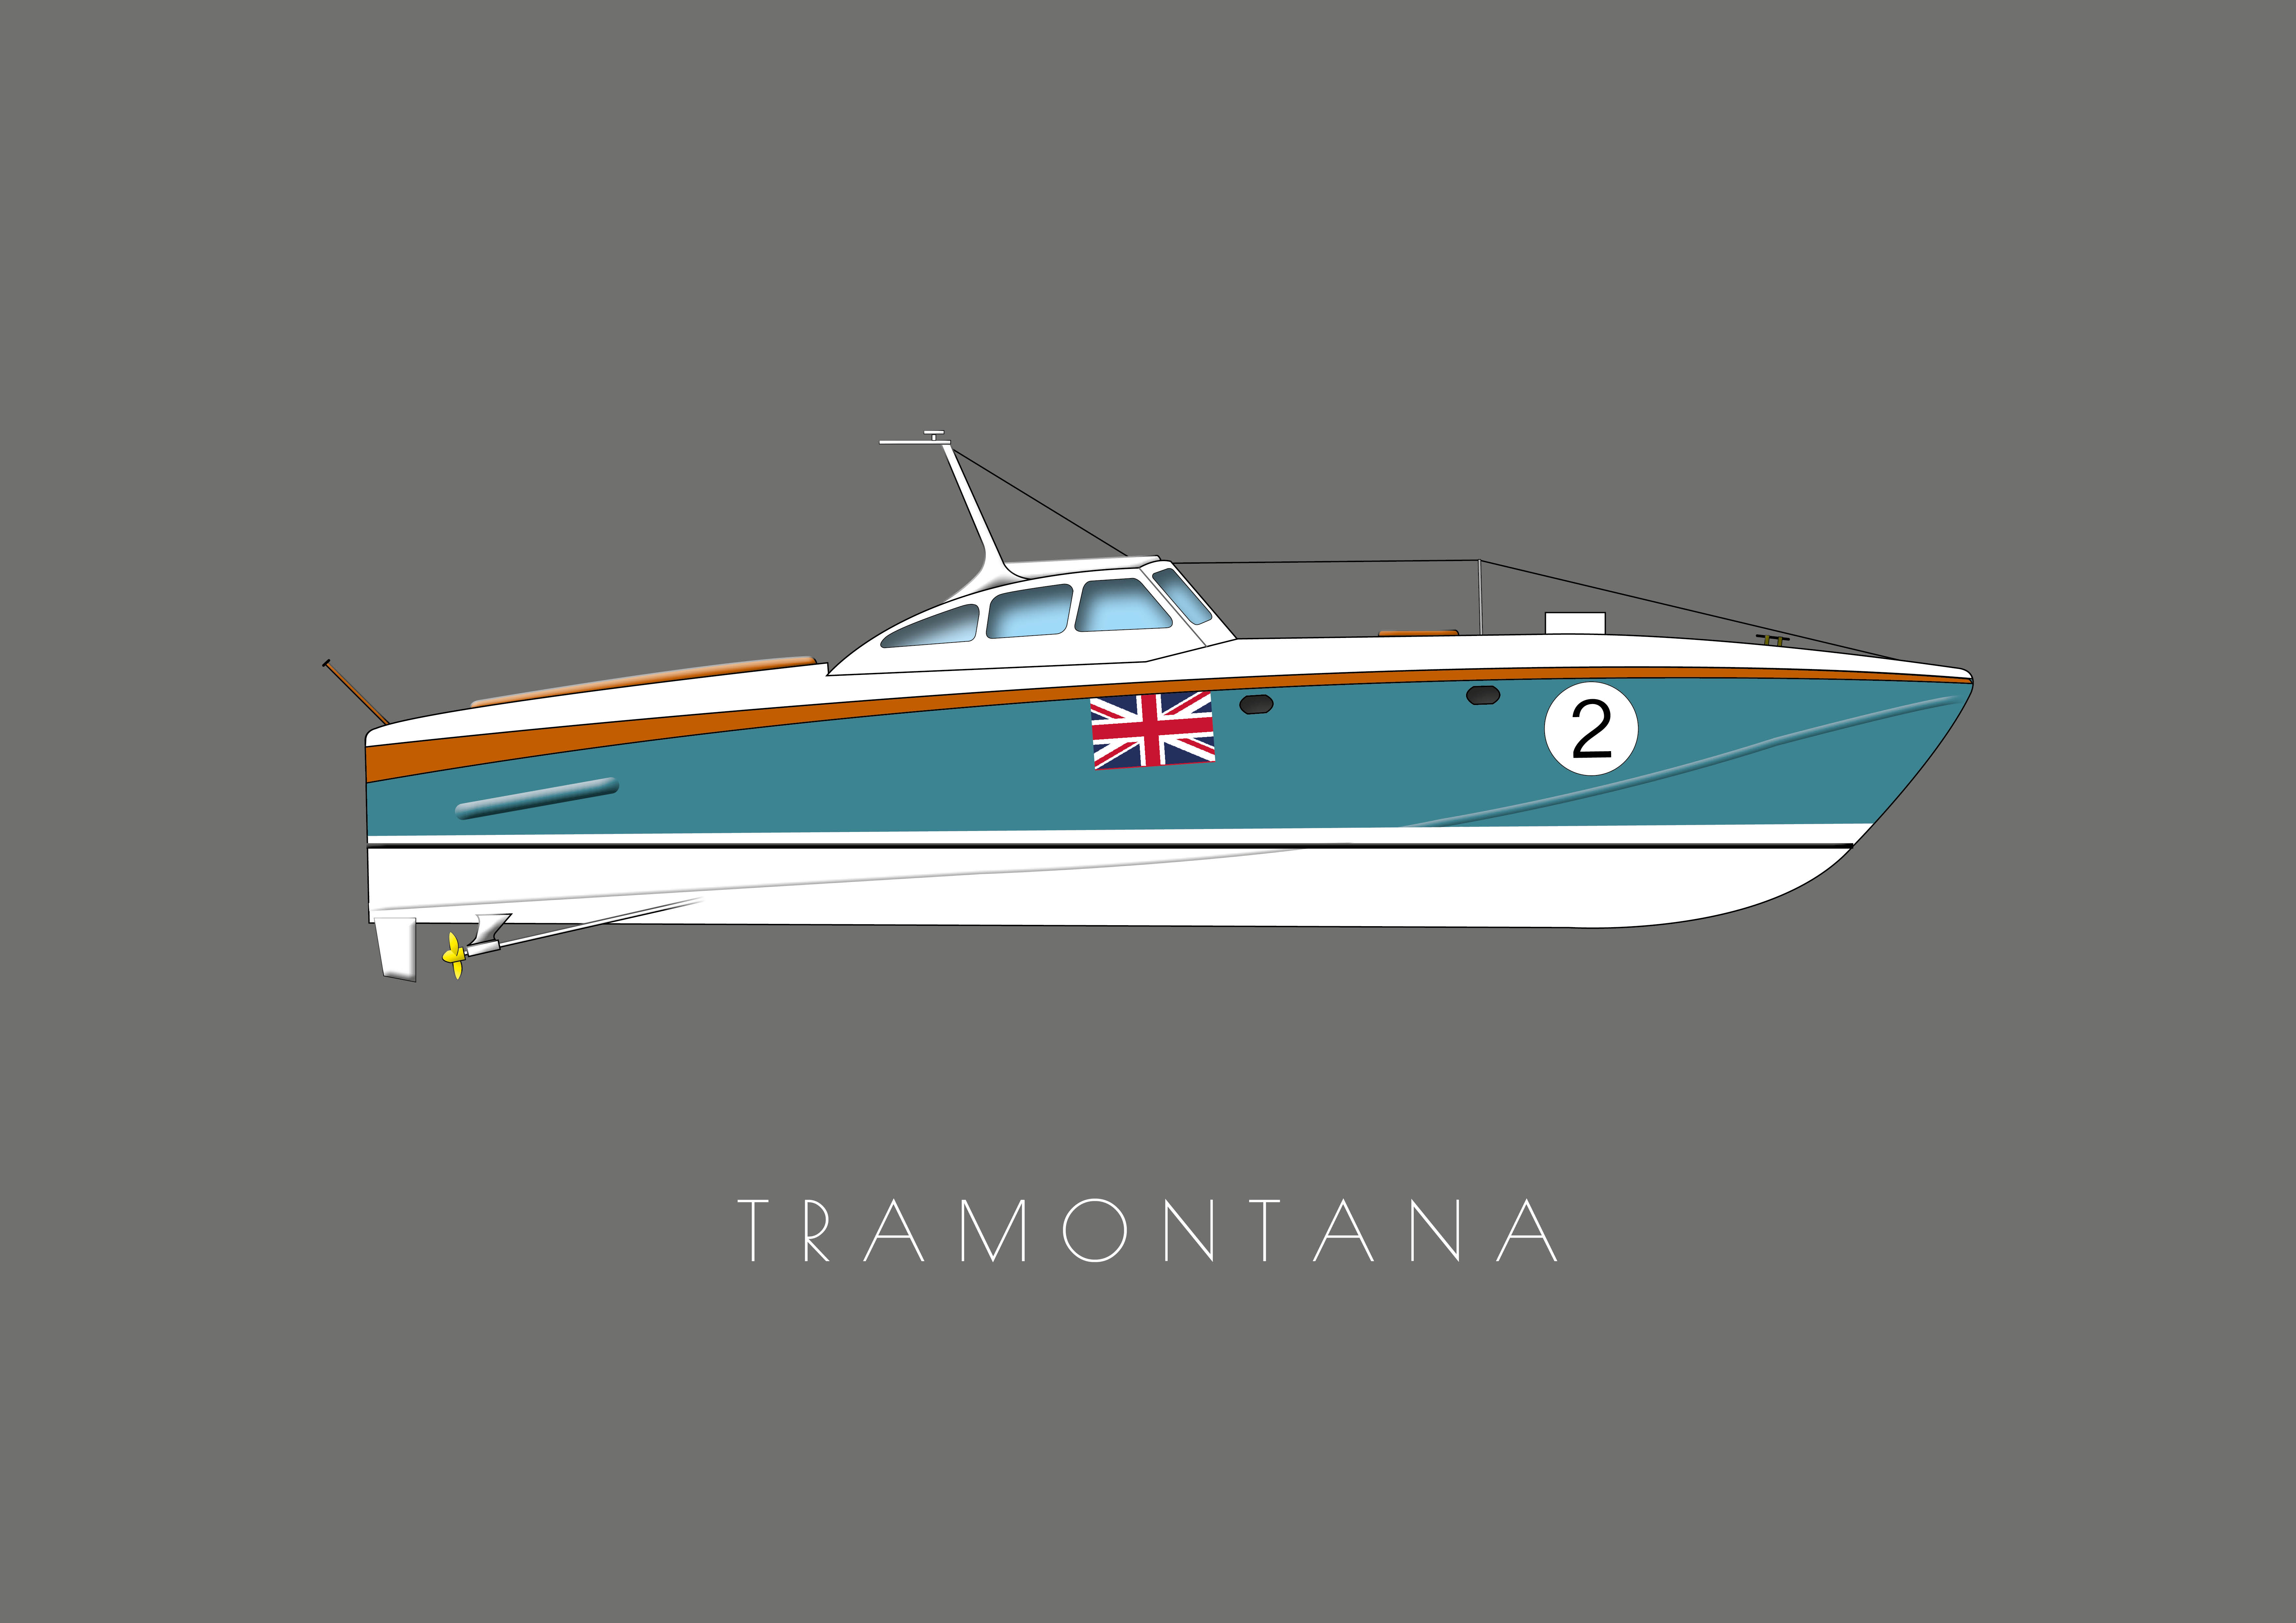 Tramontana - A4 Giclee Print